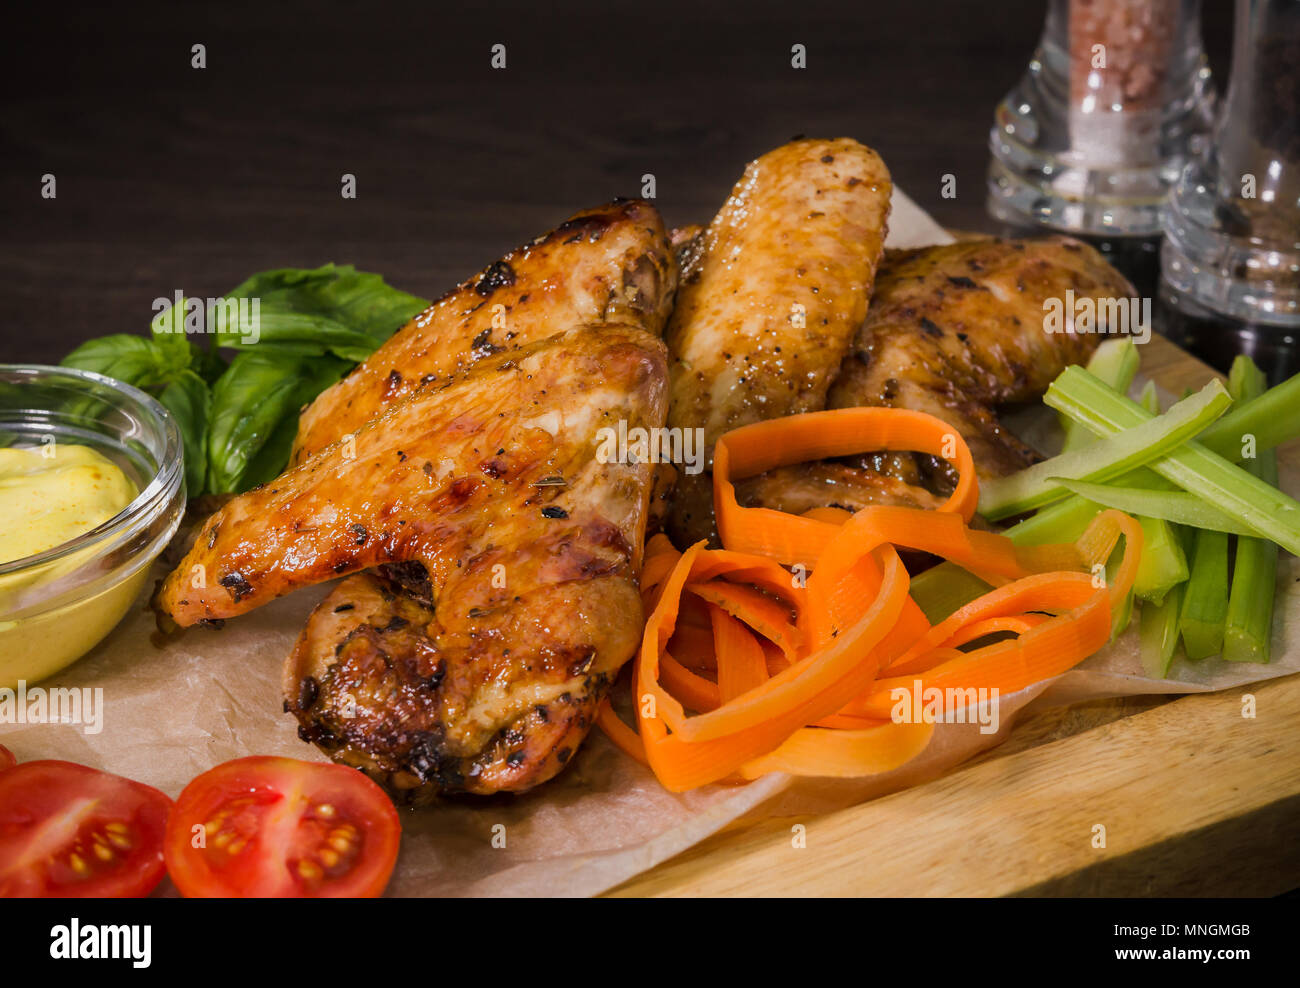 Fried Chicken Wings mit Soße und Salat Stockfotografie - Alamy